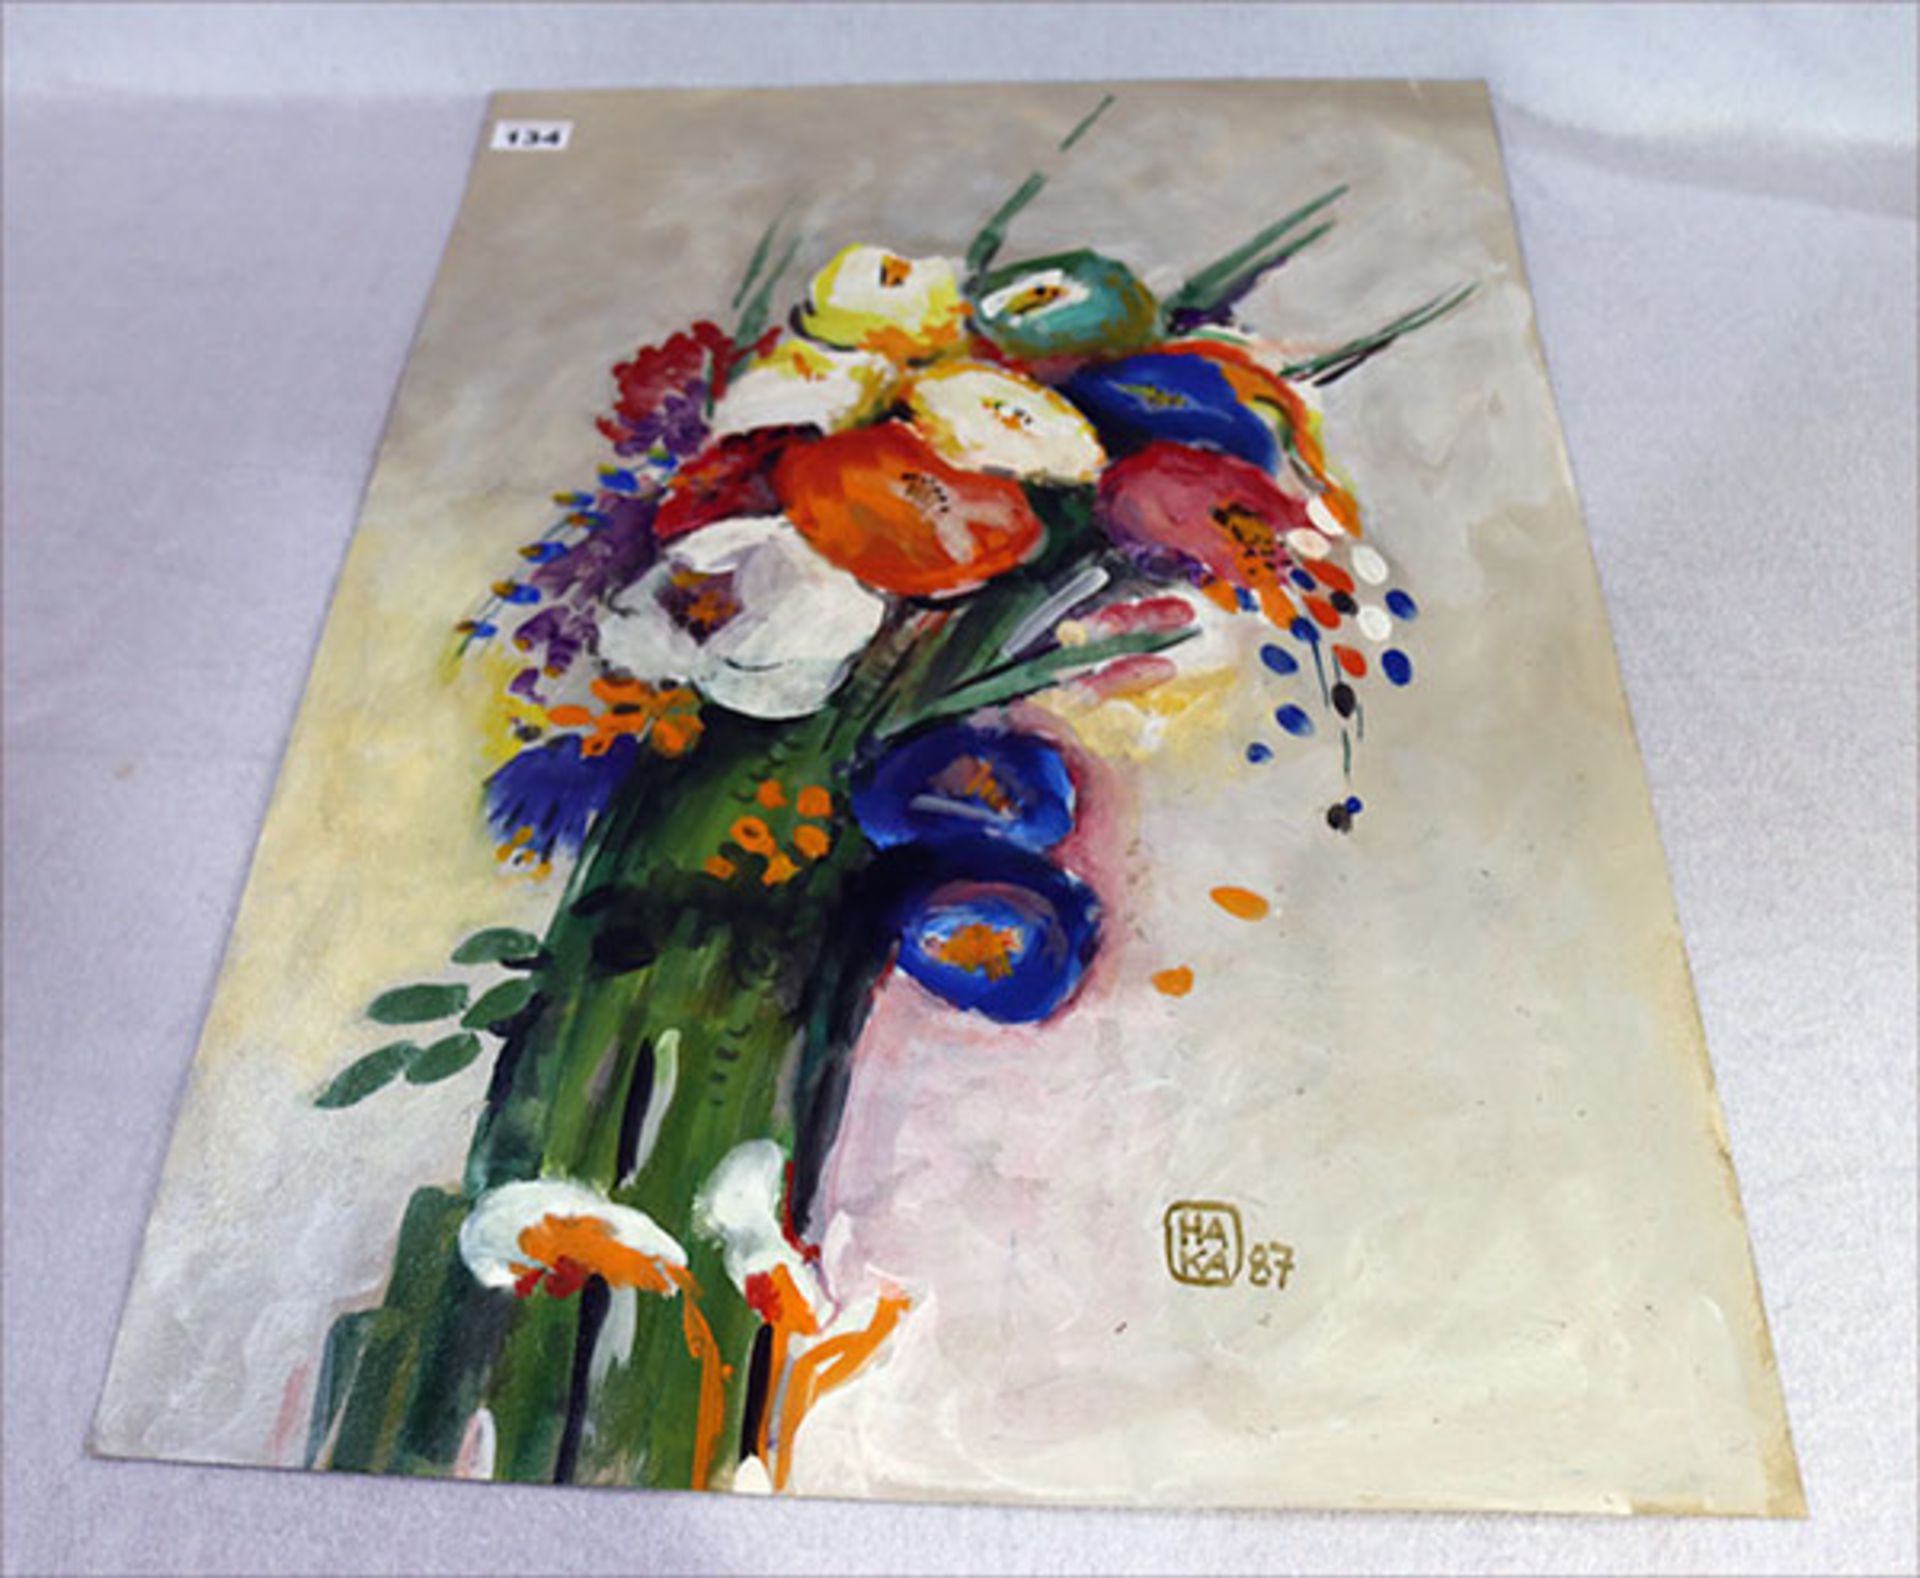 Gemälde ÖL/Malkarton 'Blumenstrauß', monogrammiert HA KA 87, ohne Rahmen, 70 cm x 51 cm